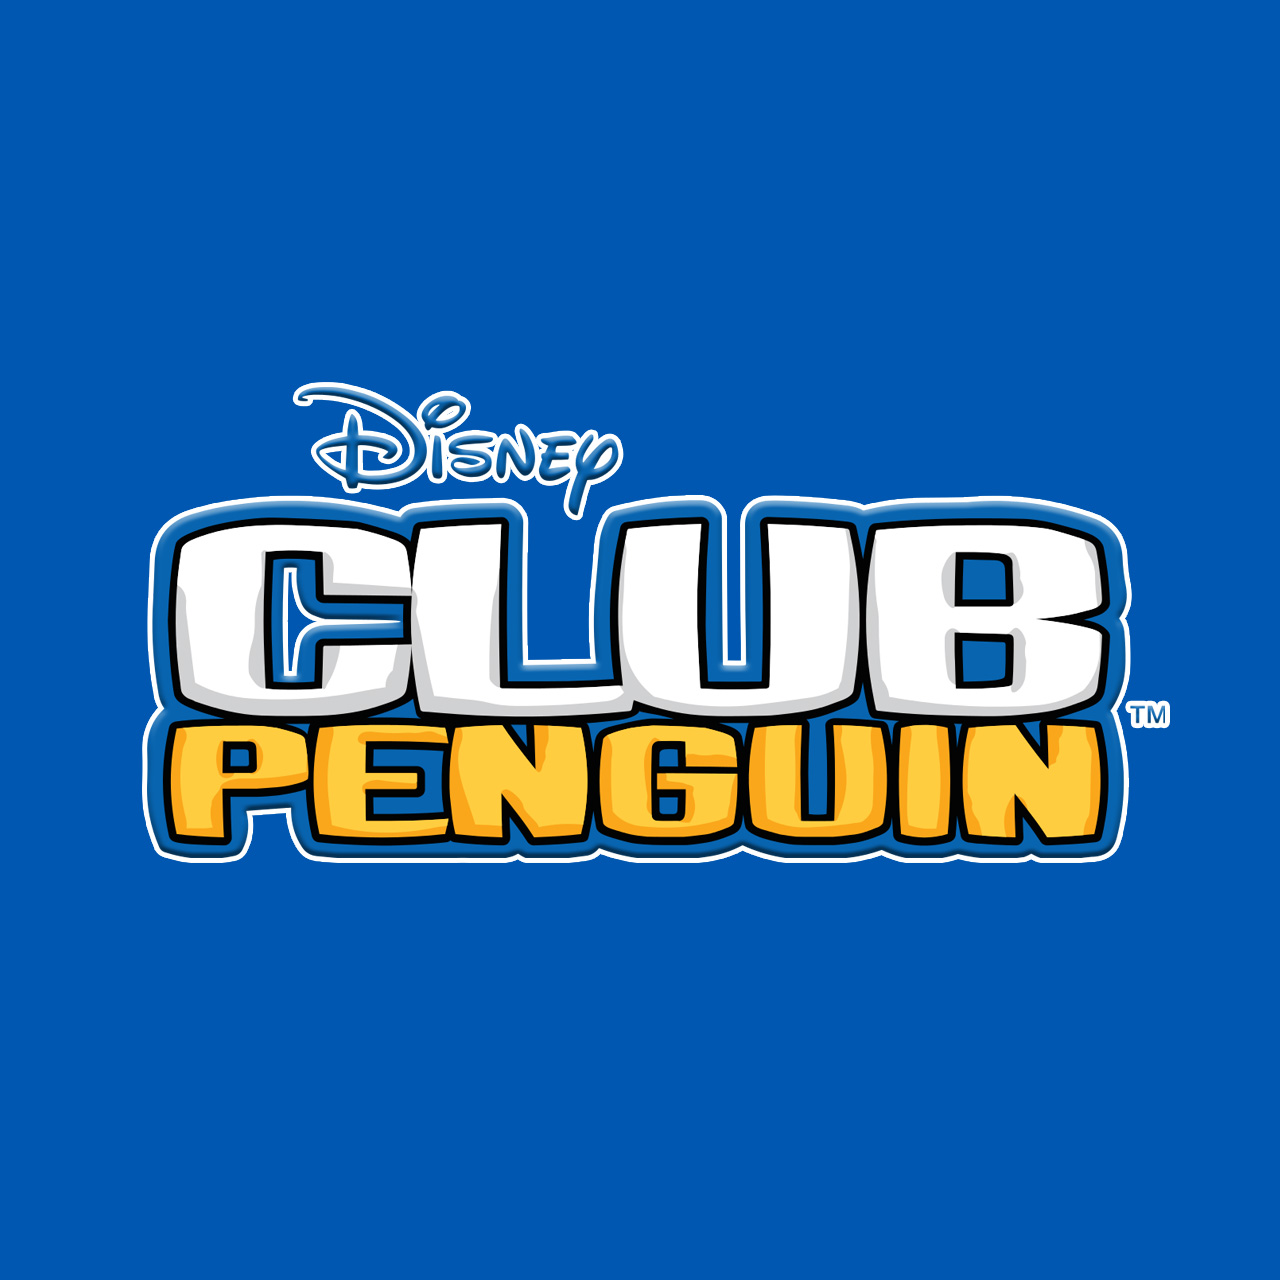 EPF Command Room  Club penguin, Penguins, Club